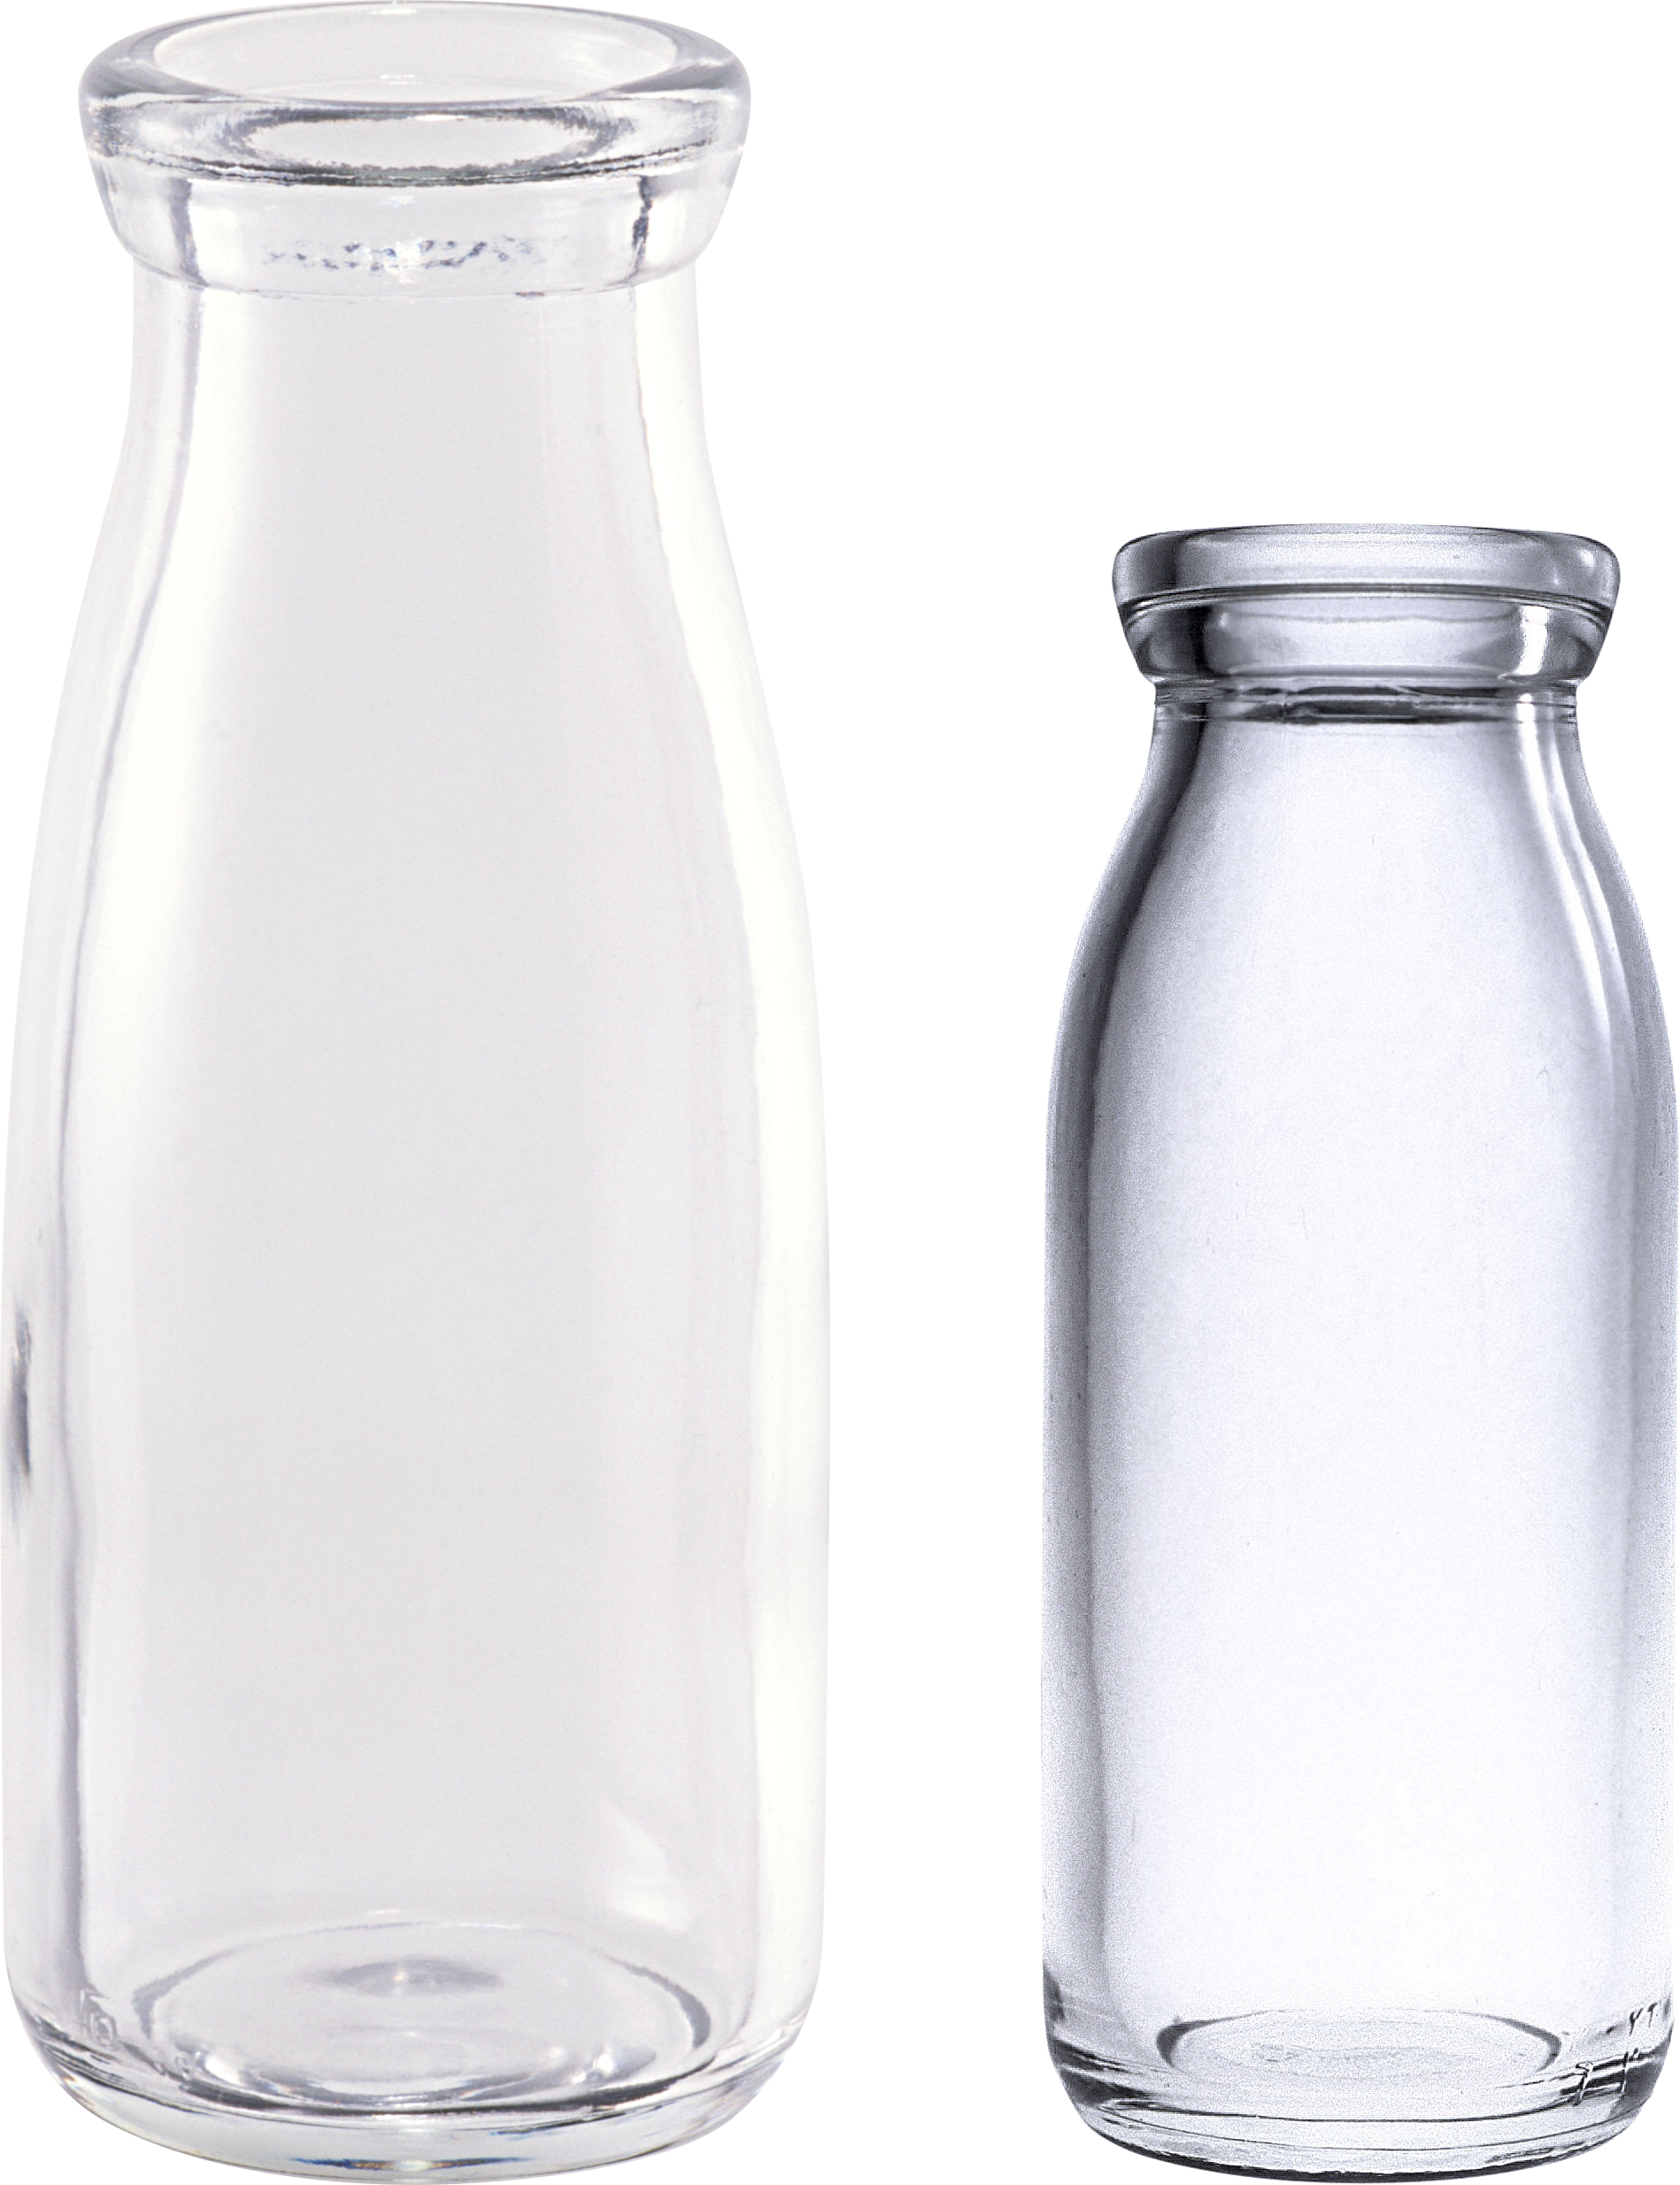 milk bottle PNG